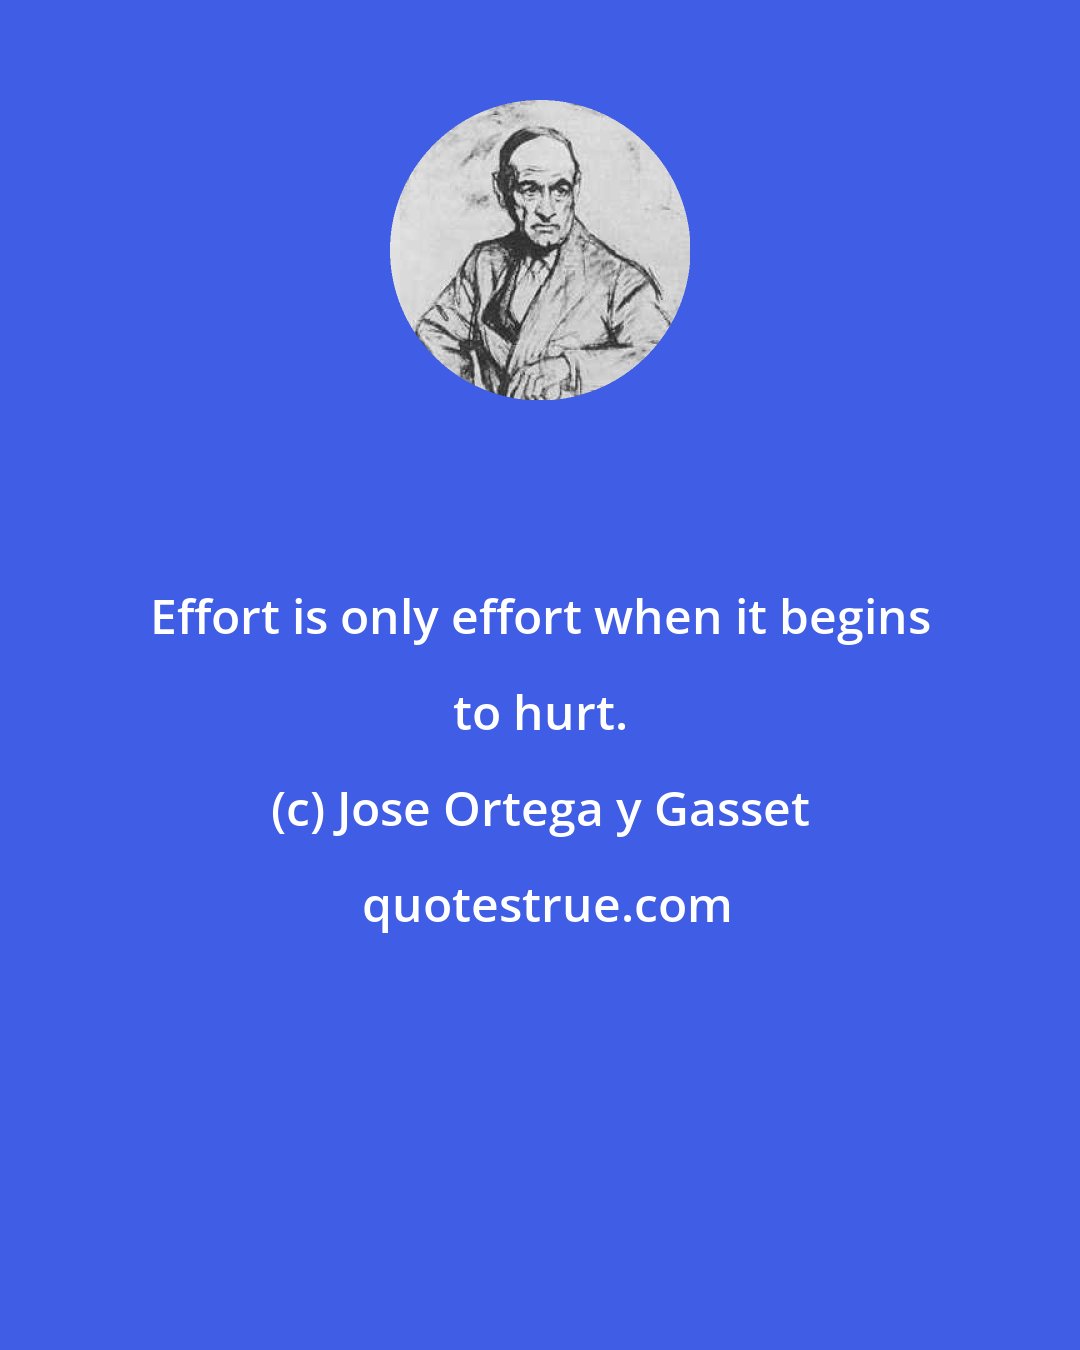 Jose Ortega y Gasset: Effort is only effort when it begins to hurt.